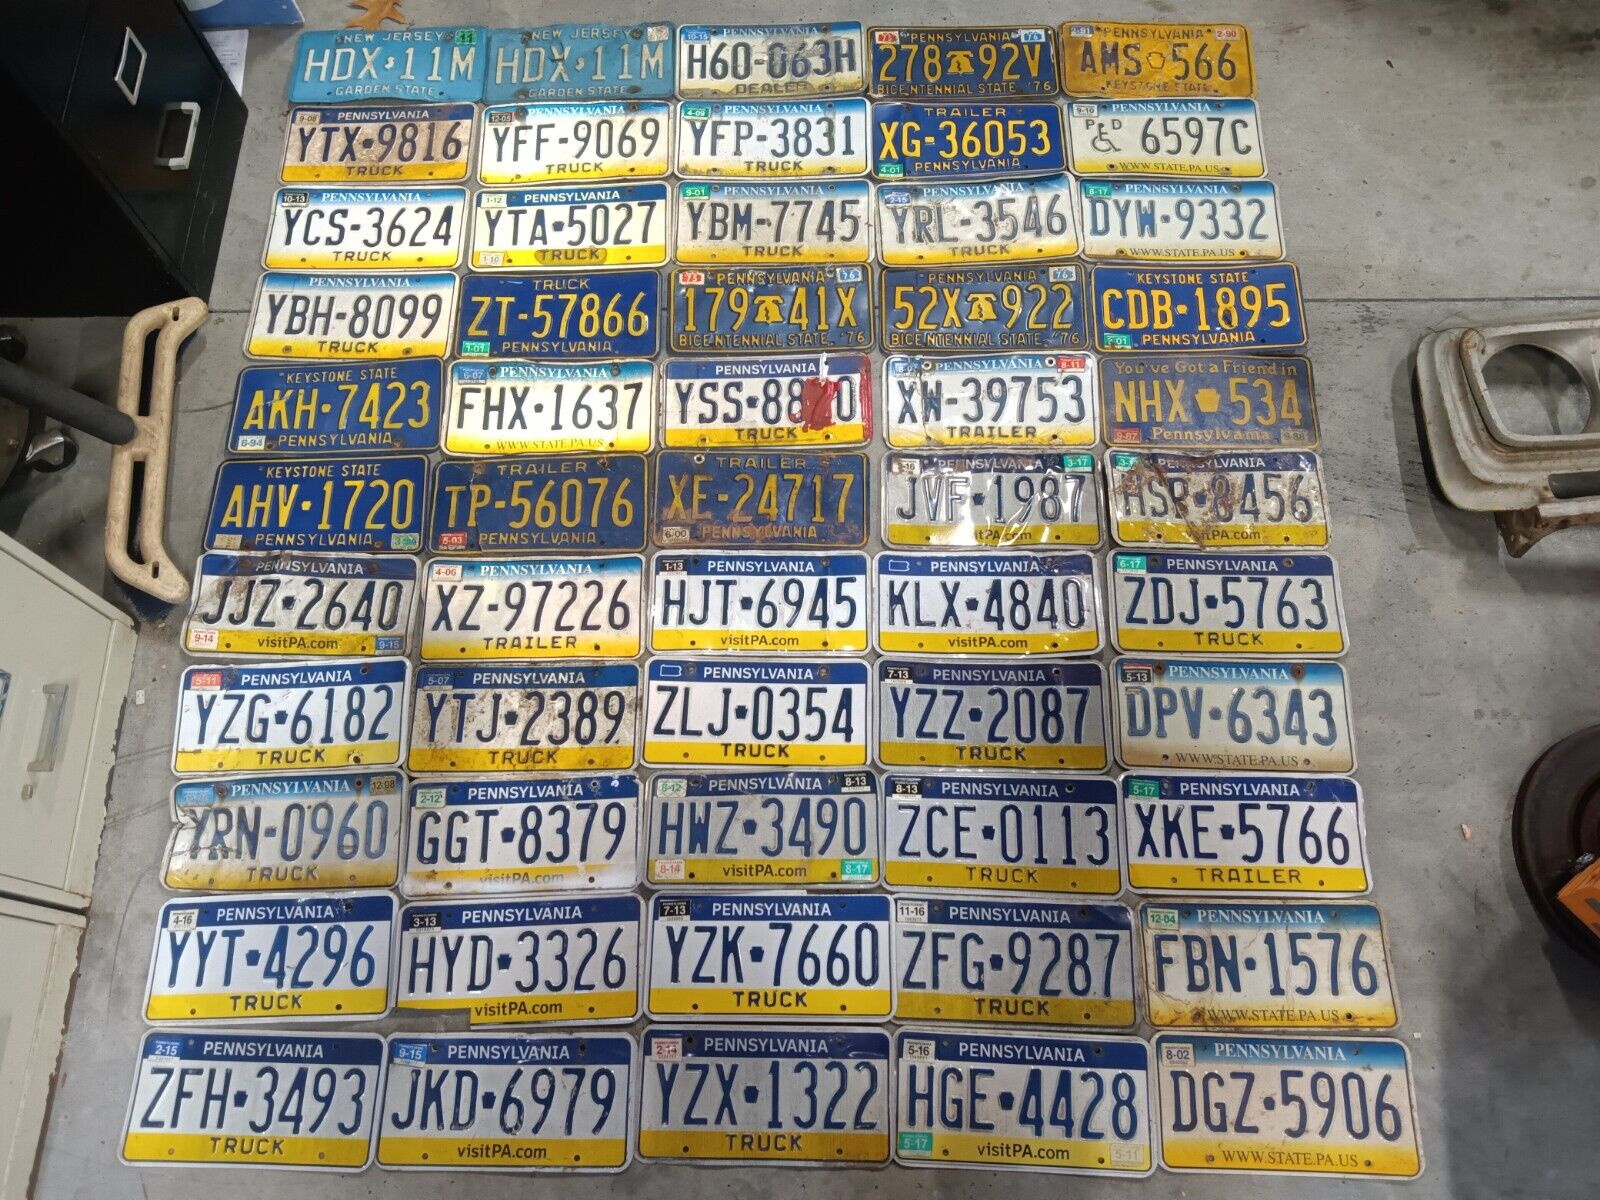 2015 Pennsylvania License plate lot of 55